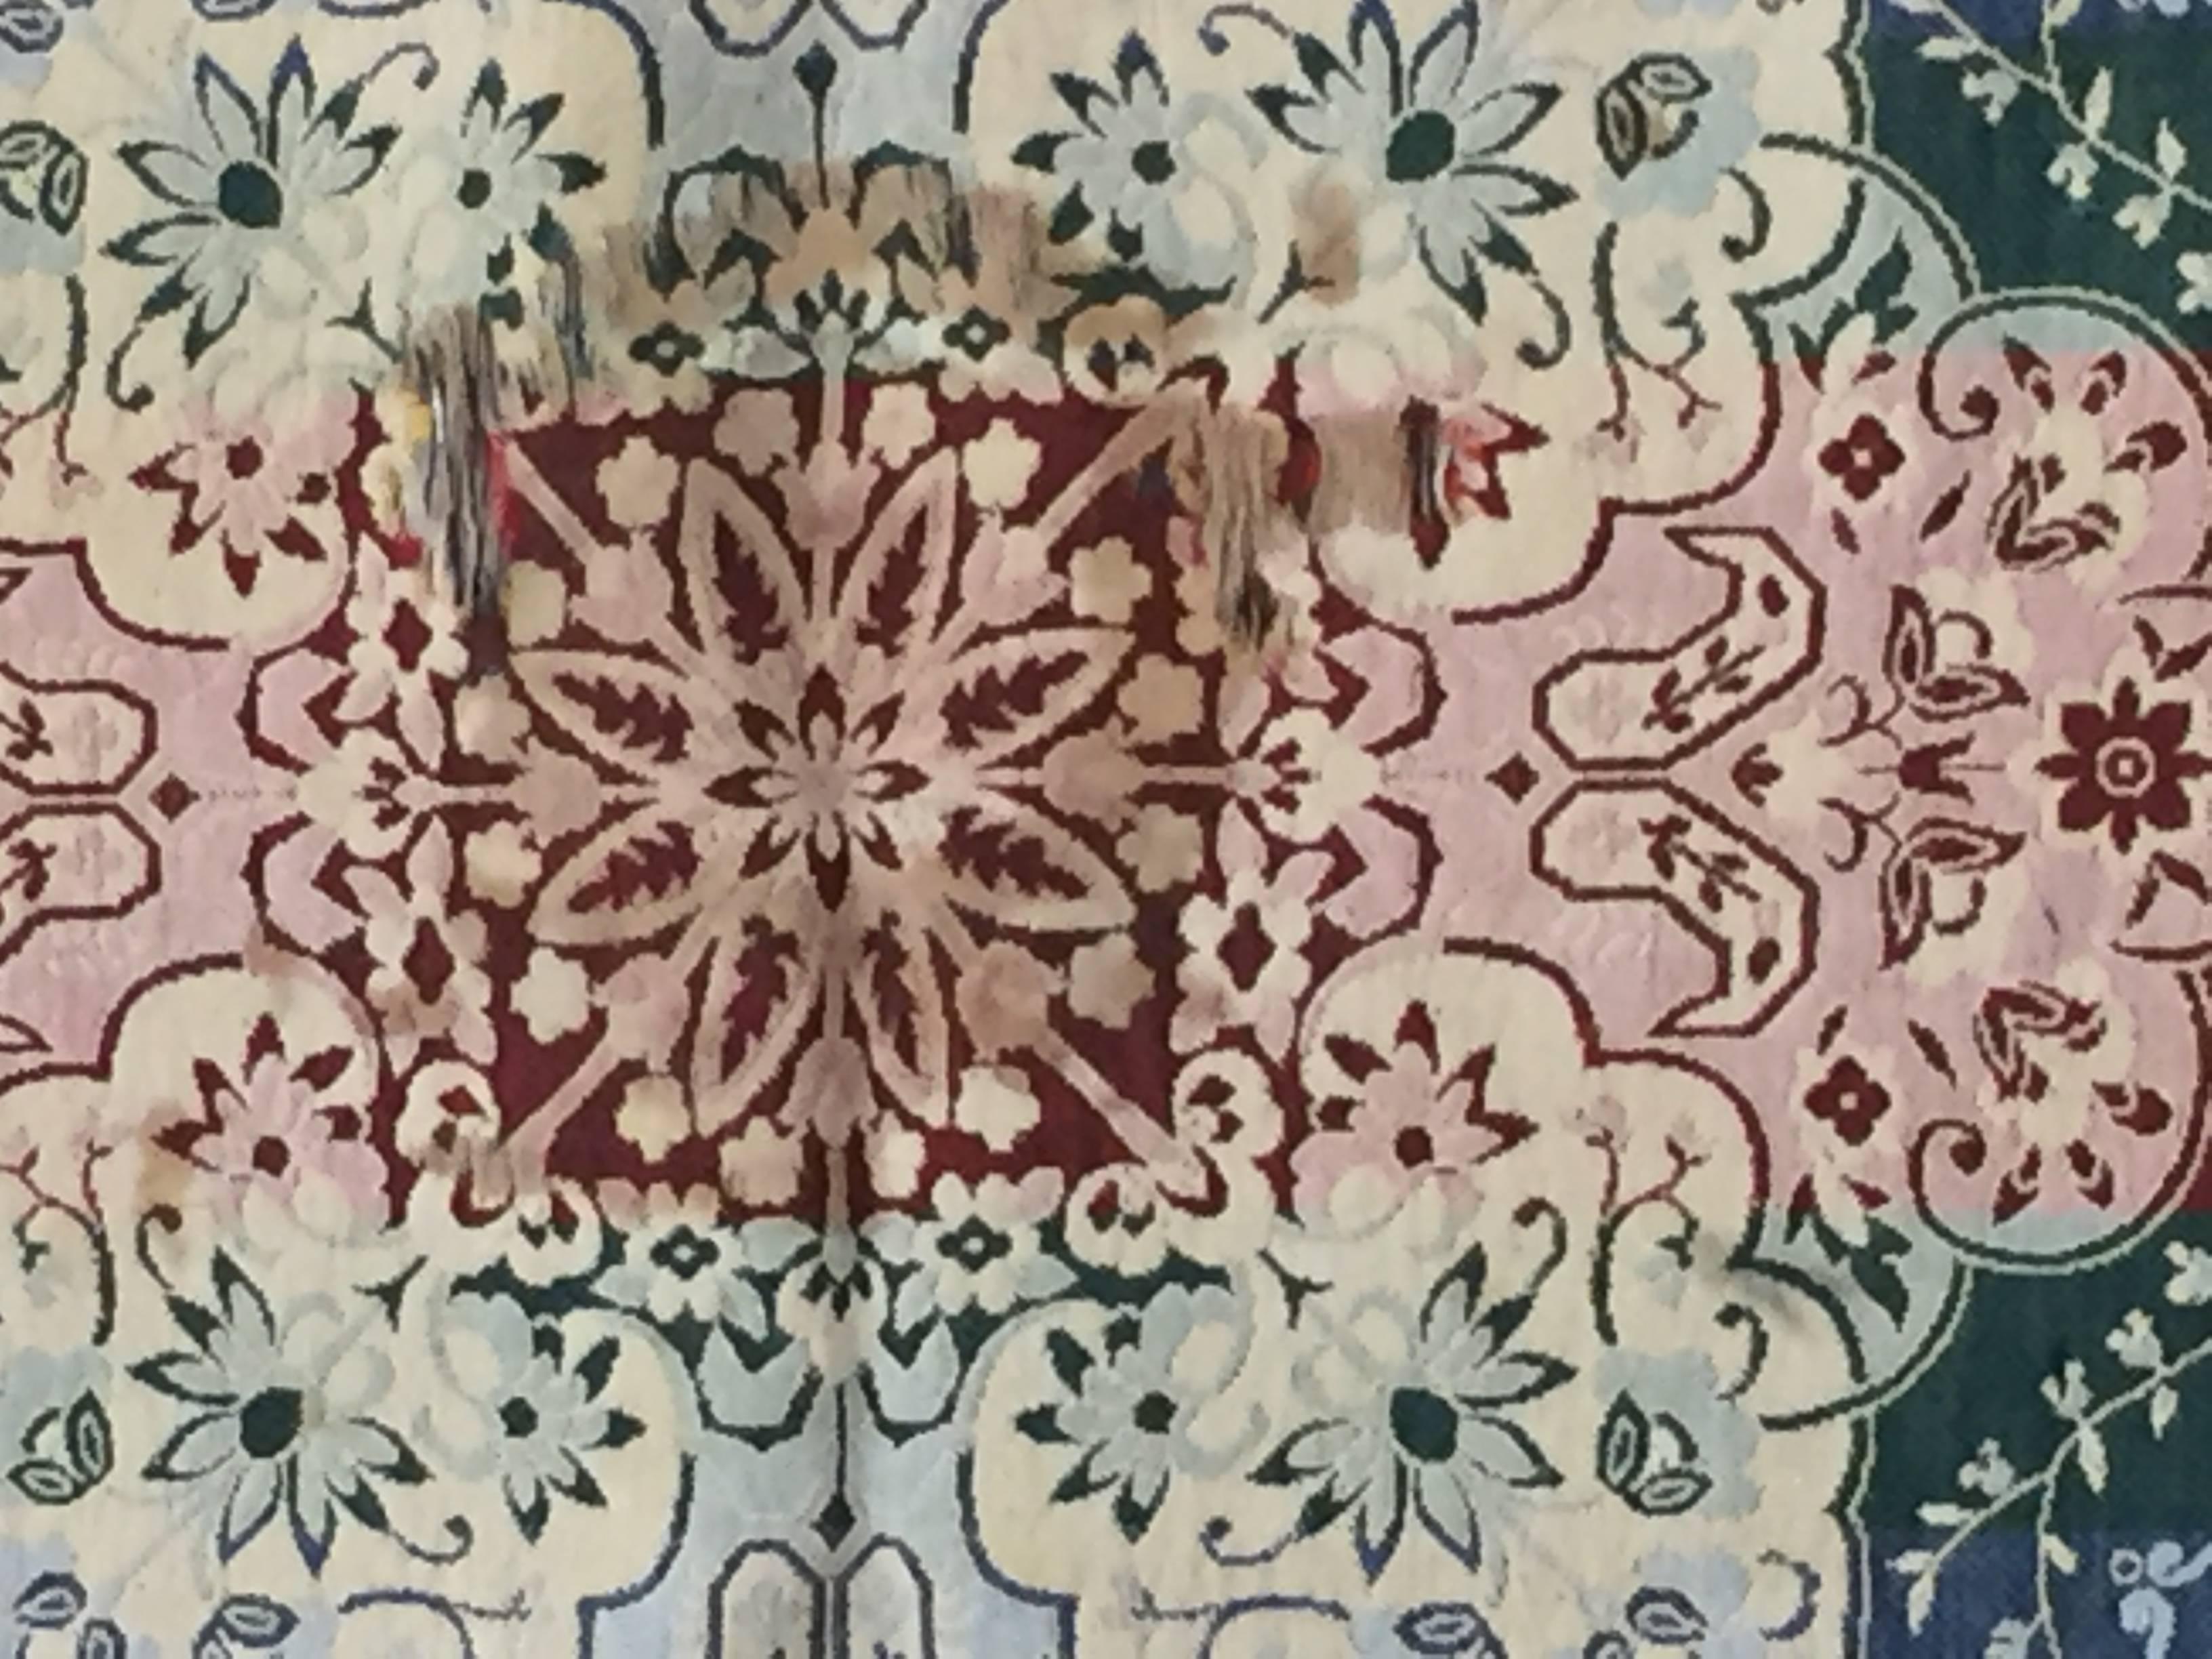 20th Century Spanish Moorish Wall Hanging Tapestry with Arabic Writing